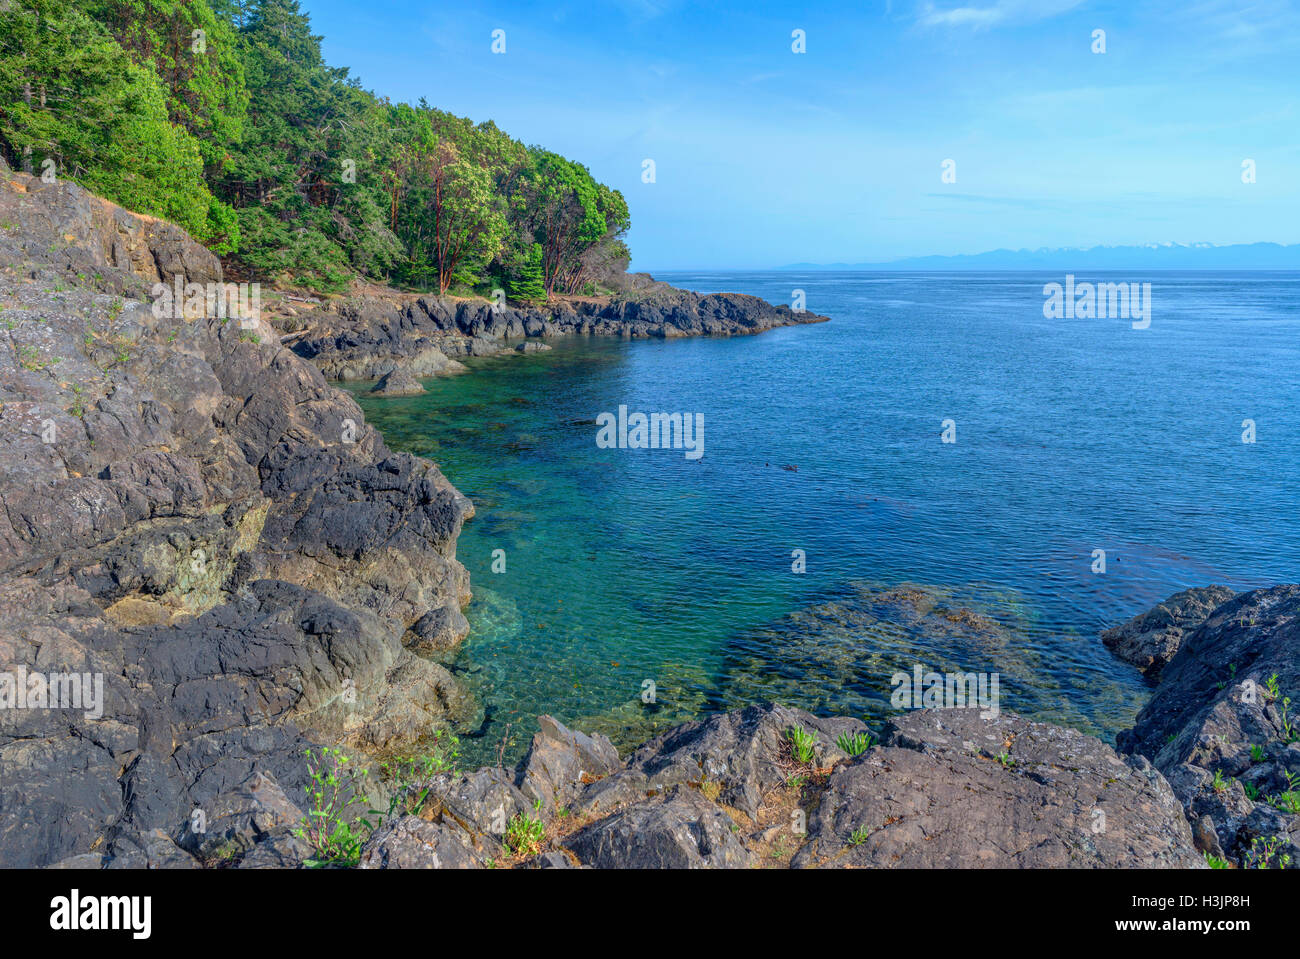 USA, Washington, San Juan Island, Lime Kiln Point State Park, Pacific madrone trees and rocky shoreline. Stock Photo